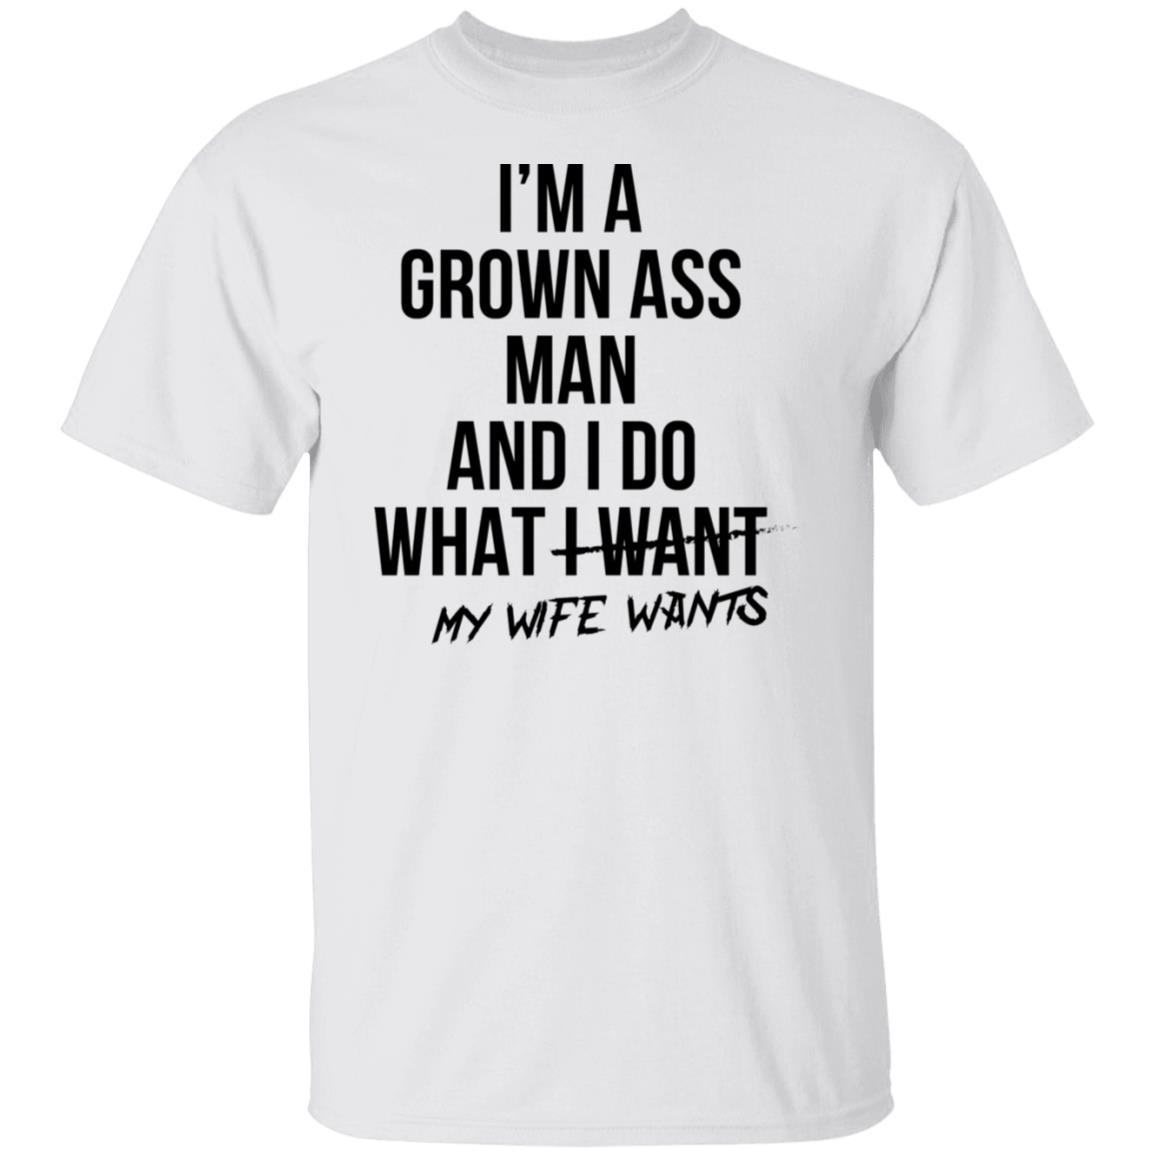 I’m a grown ass man and i do what i want my wife wants shirt